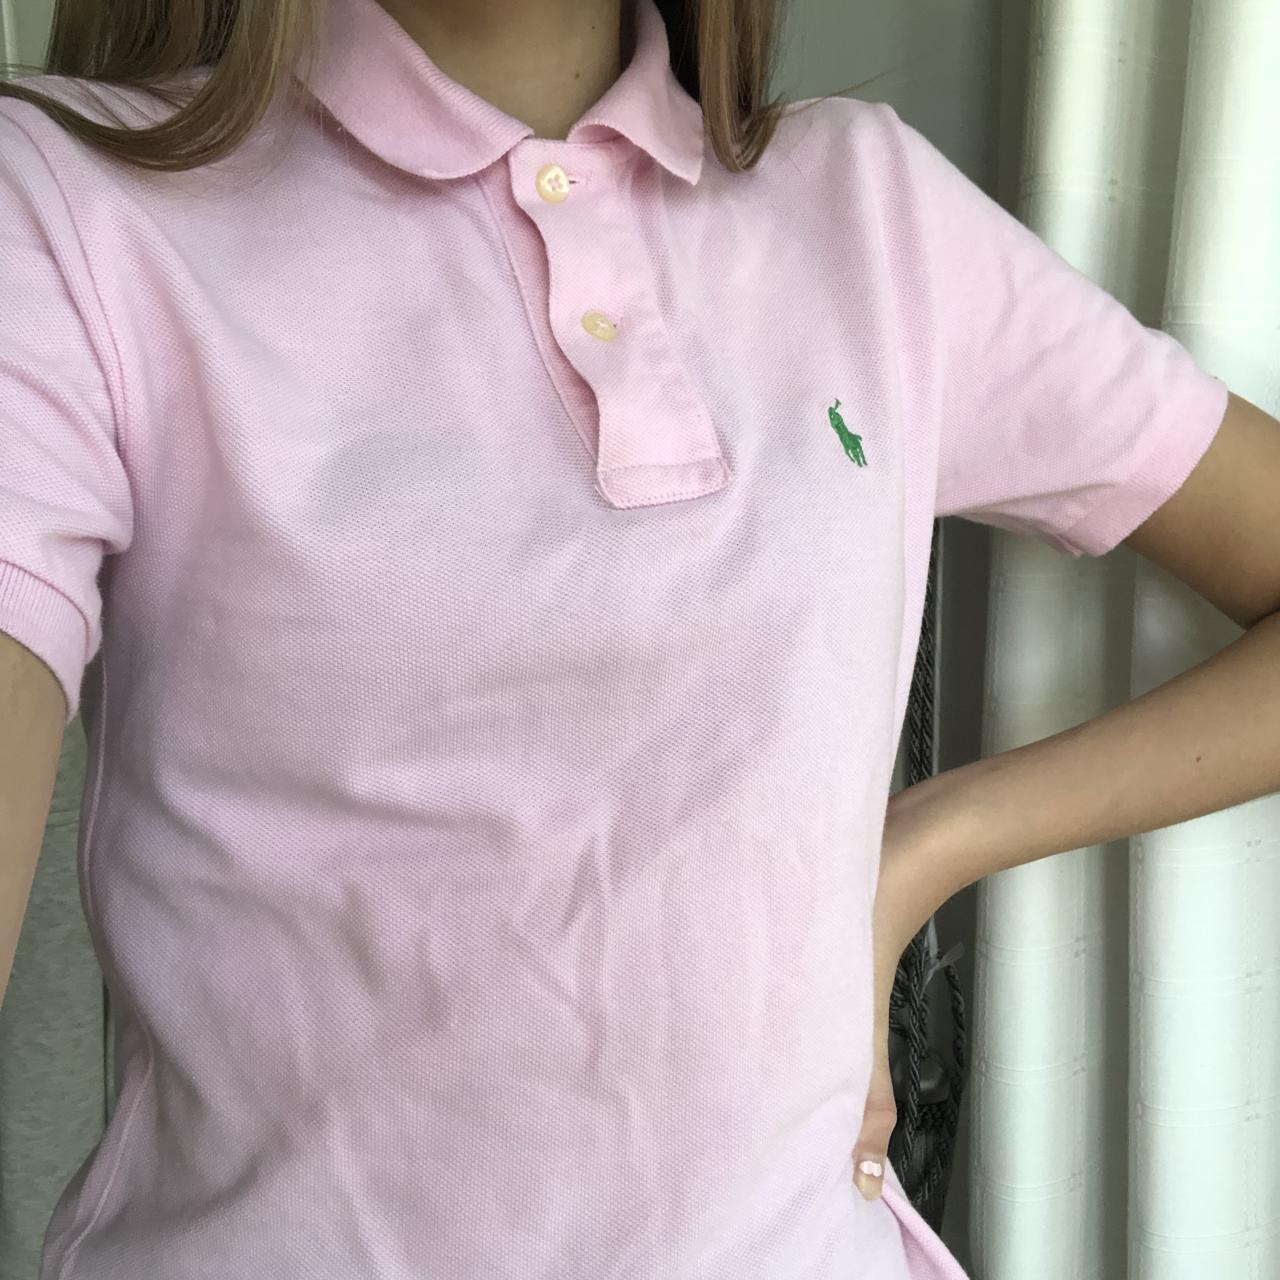 REAL Polo Ralph Lauren women’s pink polo shirt, worn